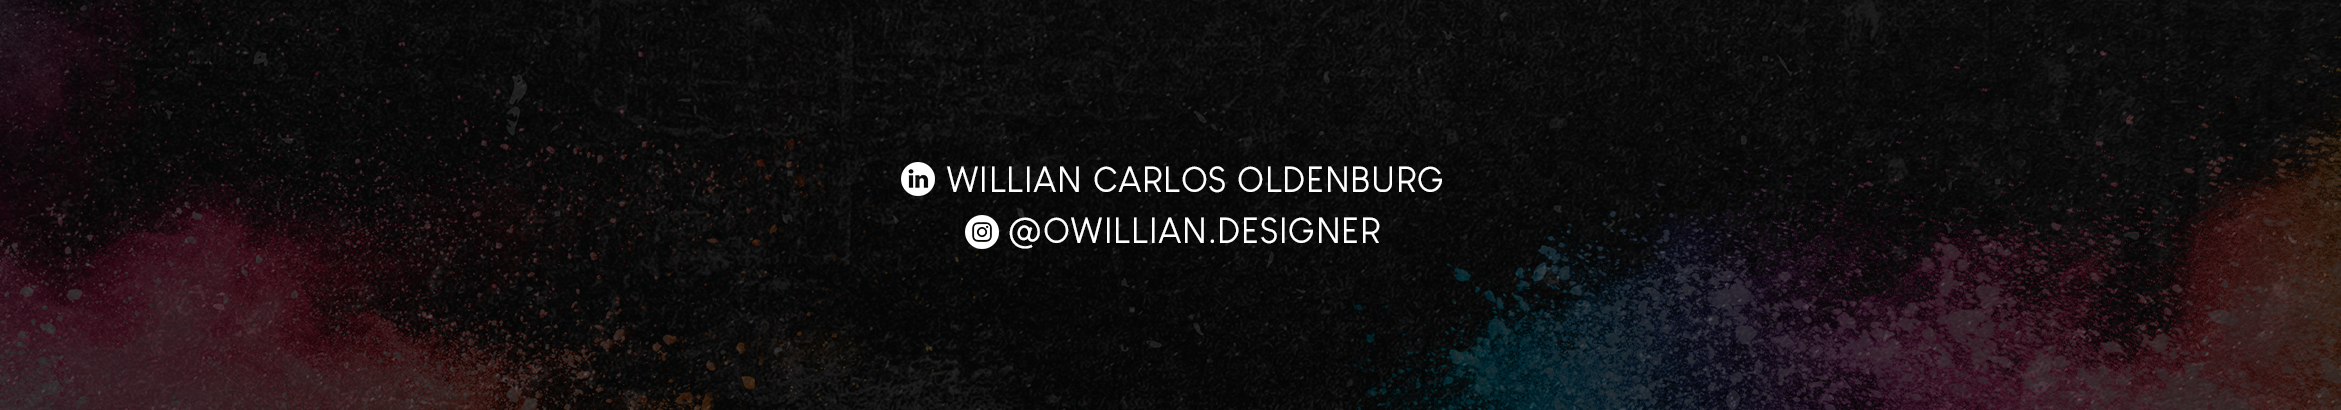 Willian Carlos Oldenburg's profile banner